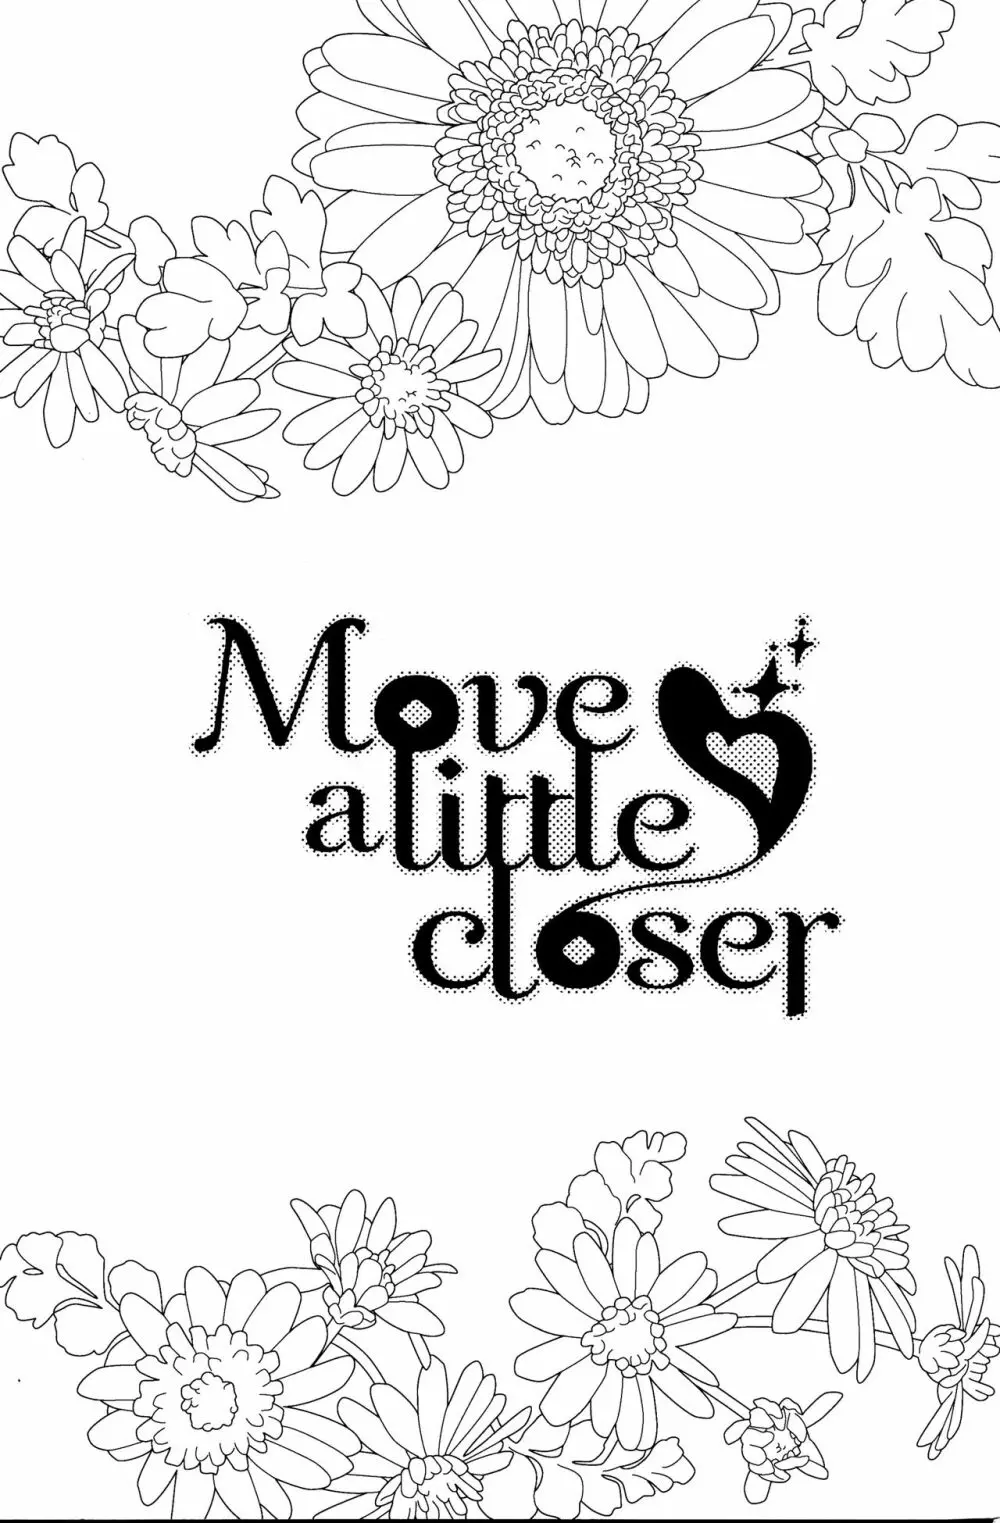 Move a little closer - page2